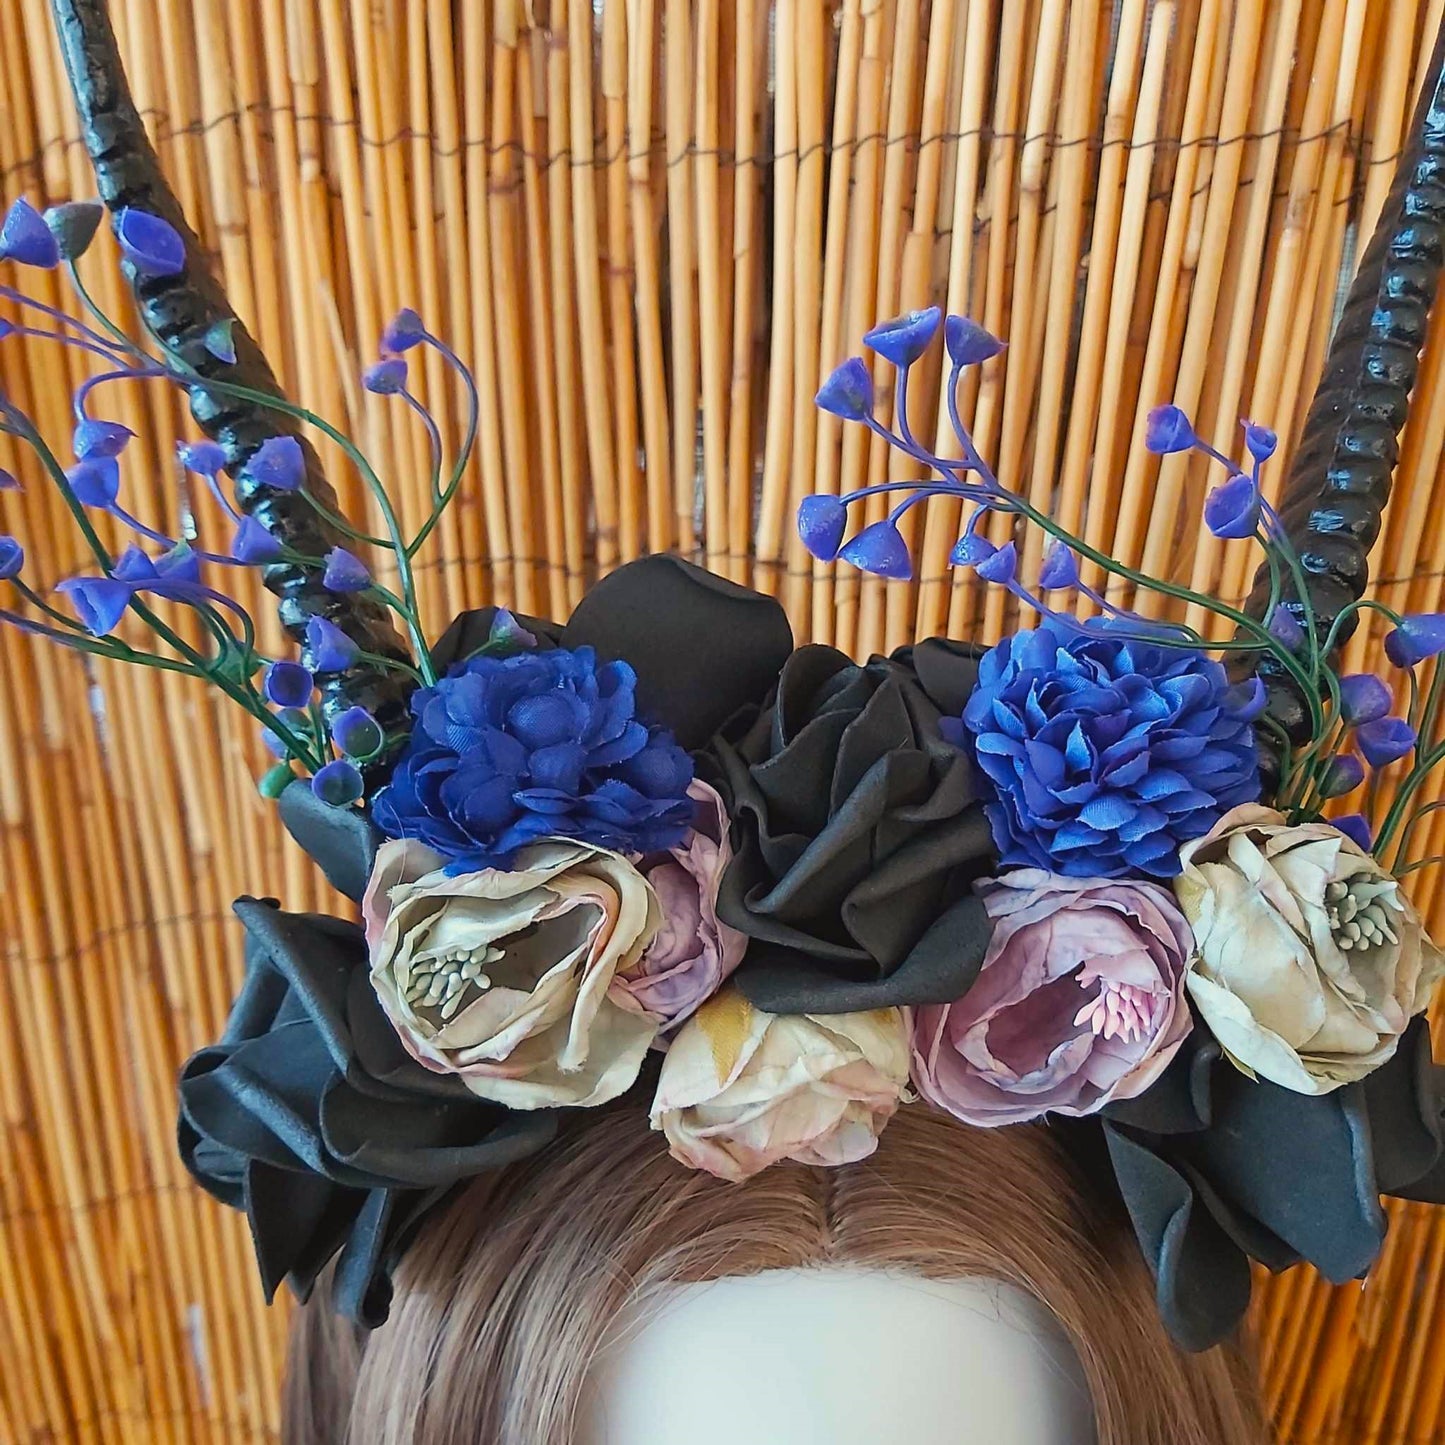 Luxury Handmade Purple Flower Headband/Headpiece